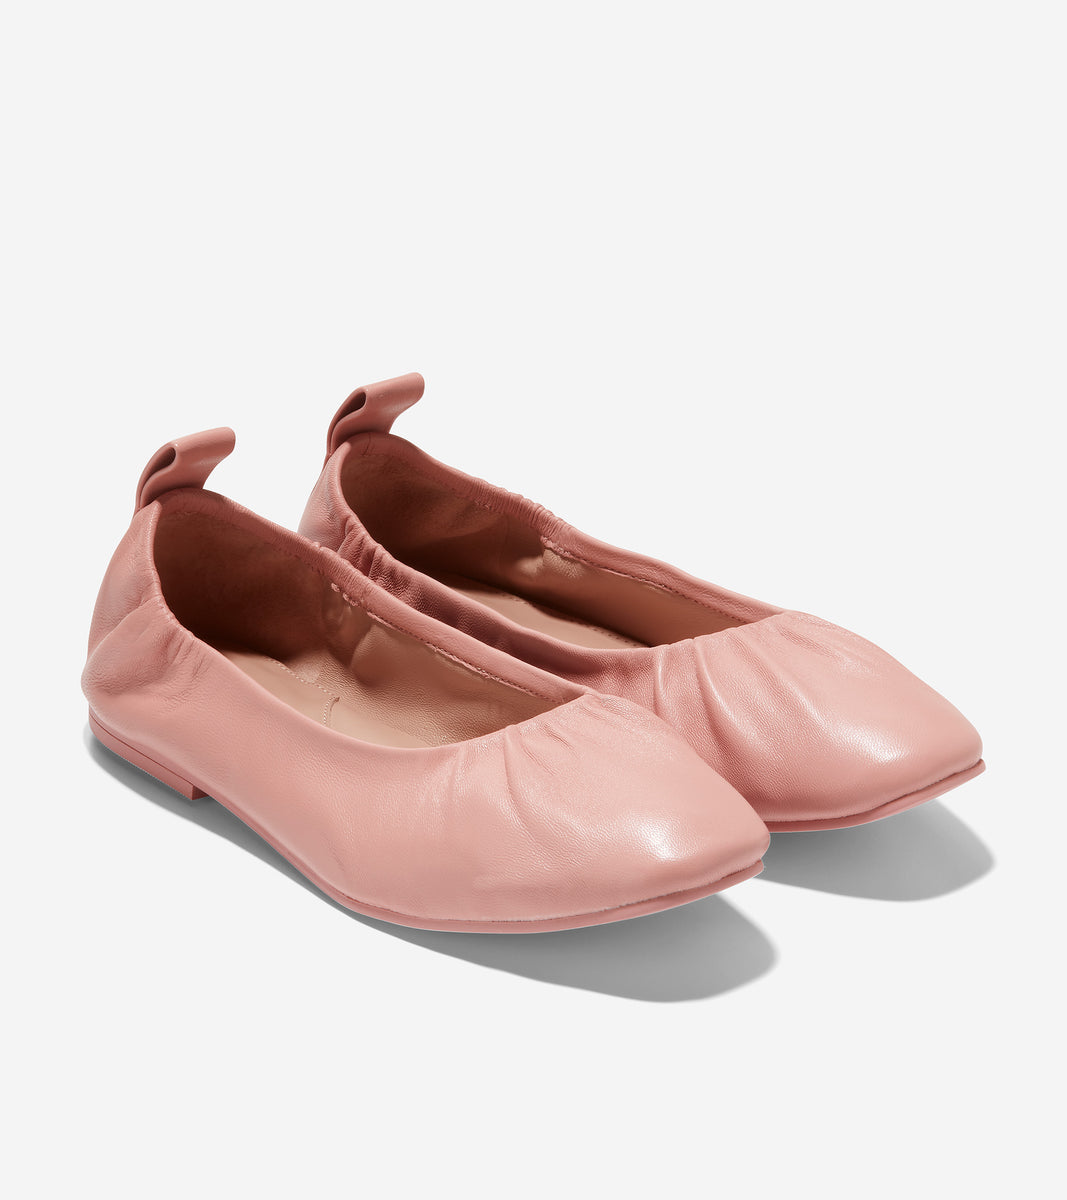 w25541-York Soft Ballet-Peony Leather